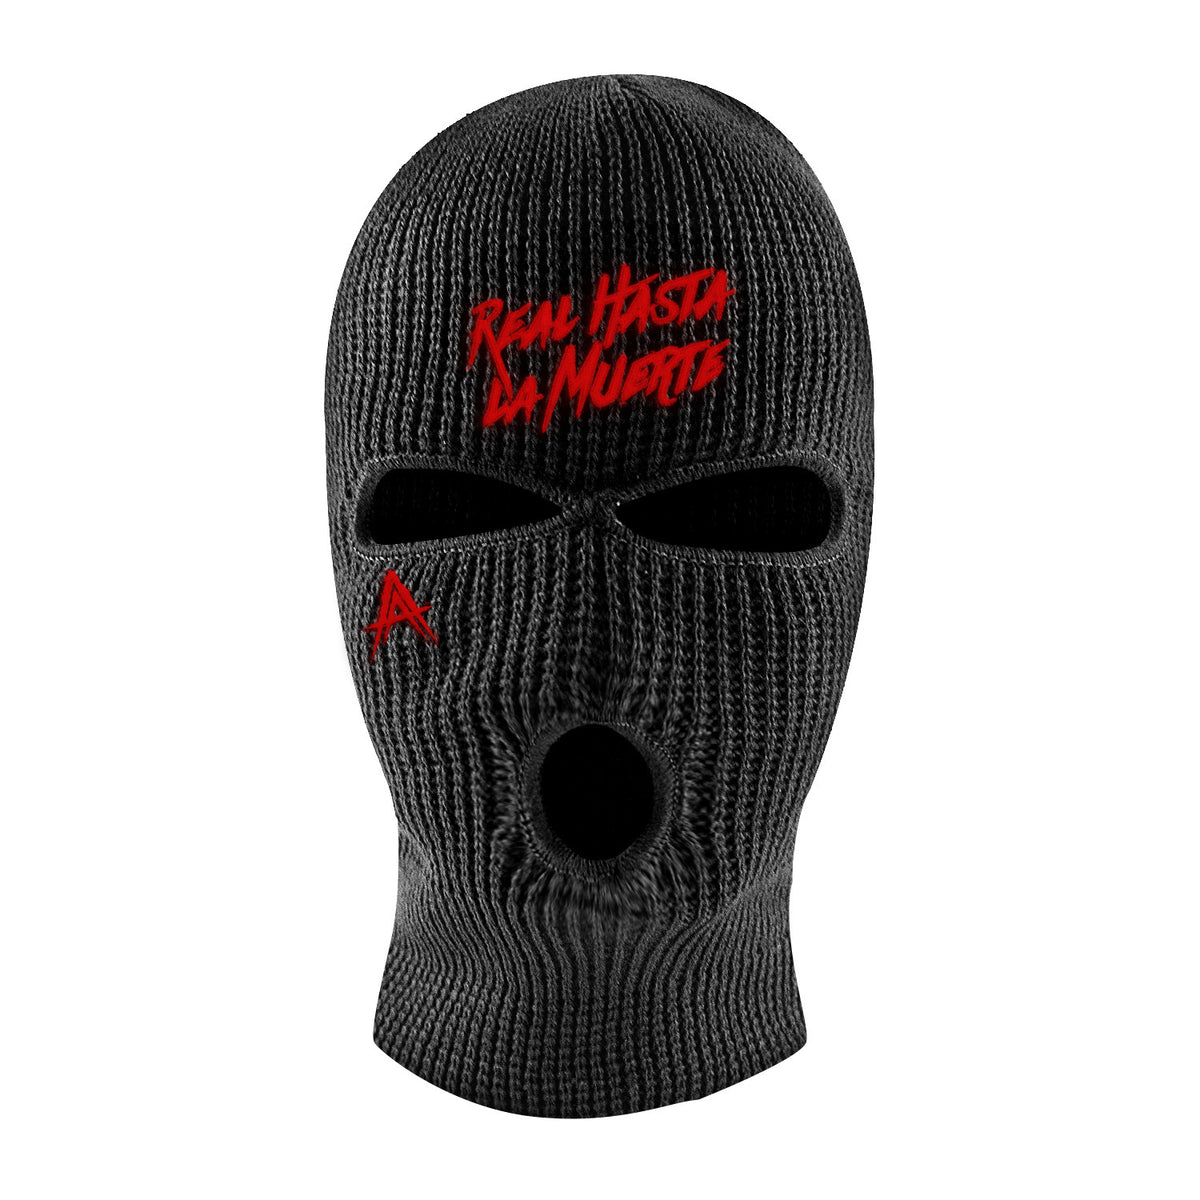 Real Hasta La Muerte Knitted Mascara - Black / Red